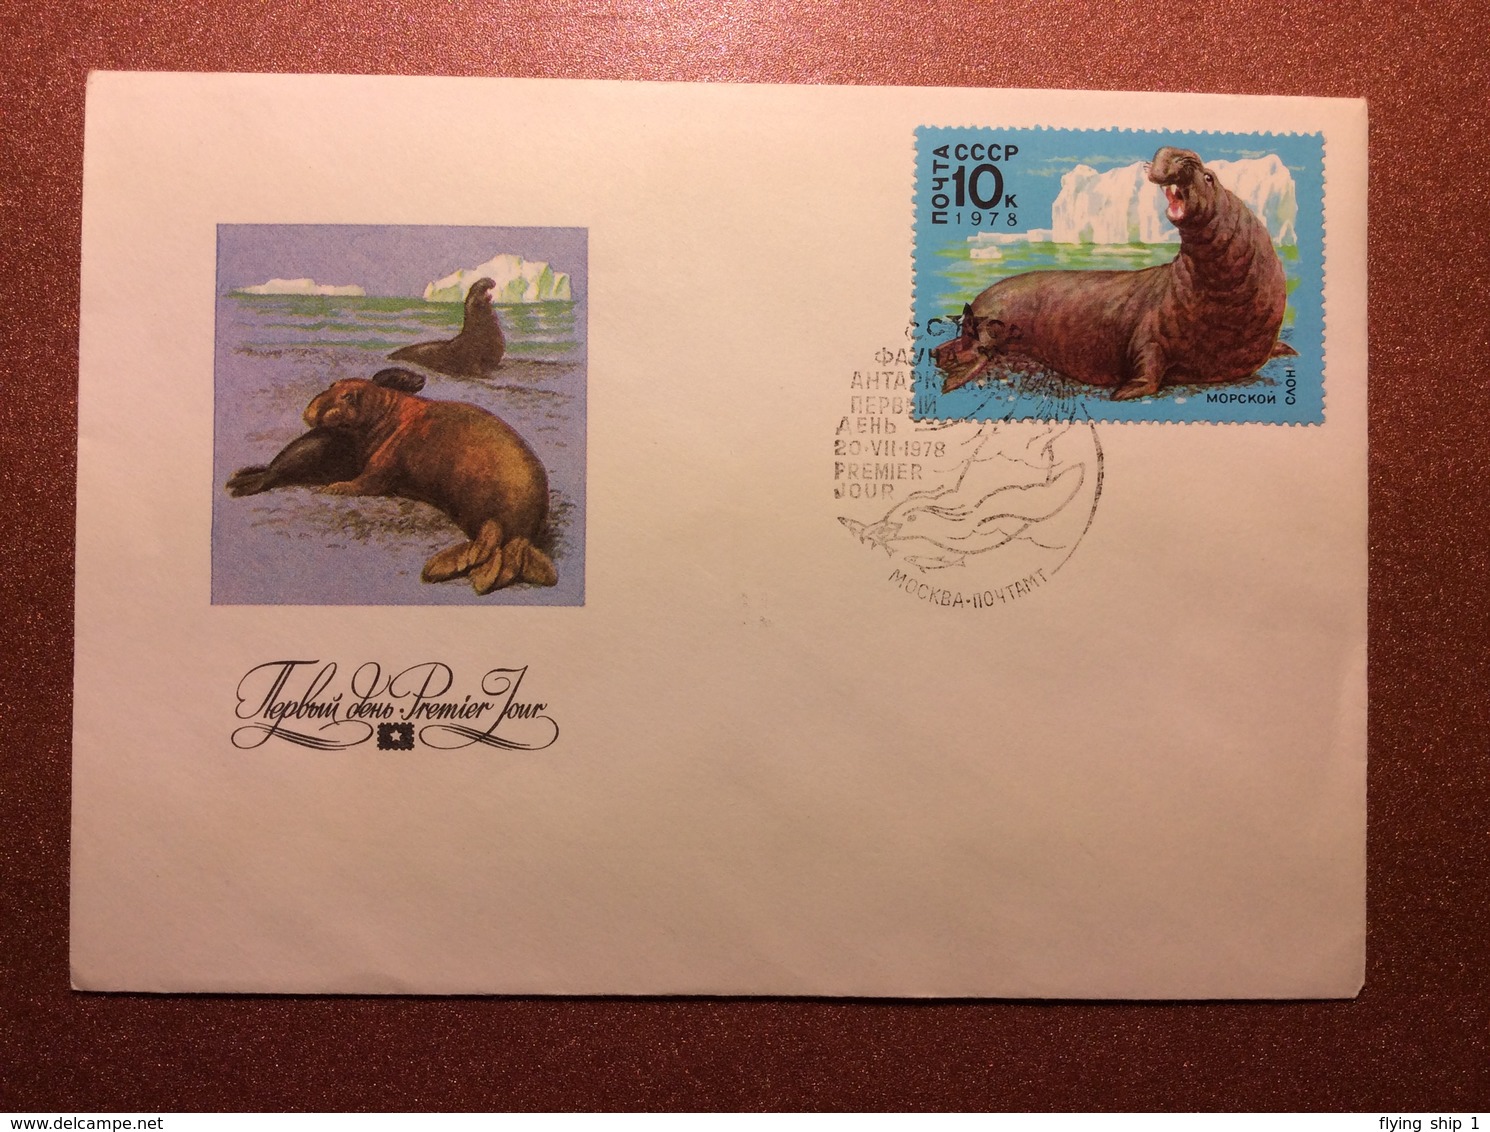 Premier Jour. Flora Of USSR. Walrus. Sea Elephant. USSR Special Cancellation Postal Cover 1978 By Kolganov - 1970-79